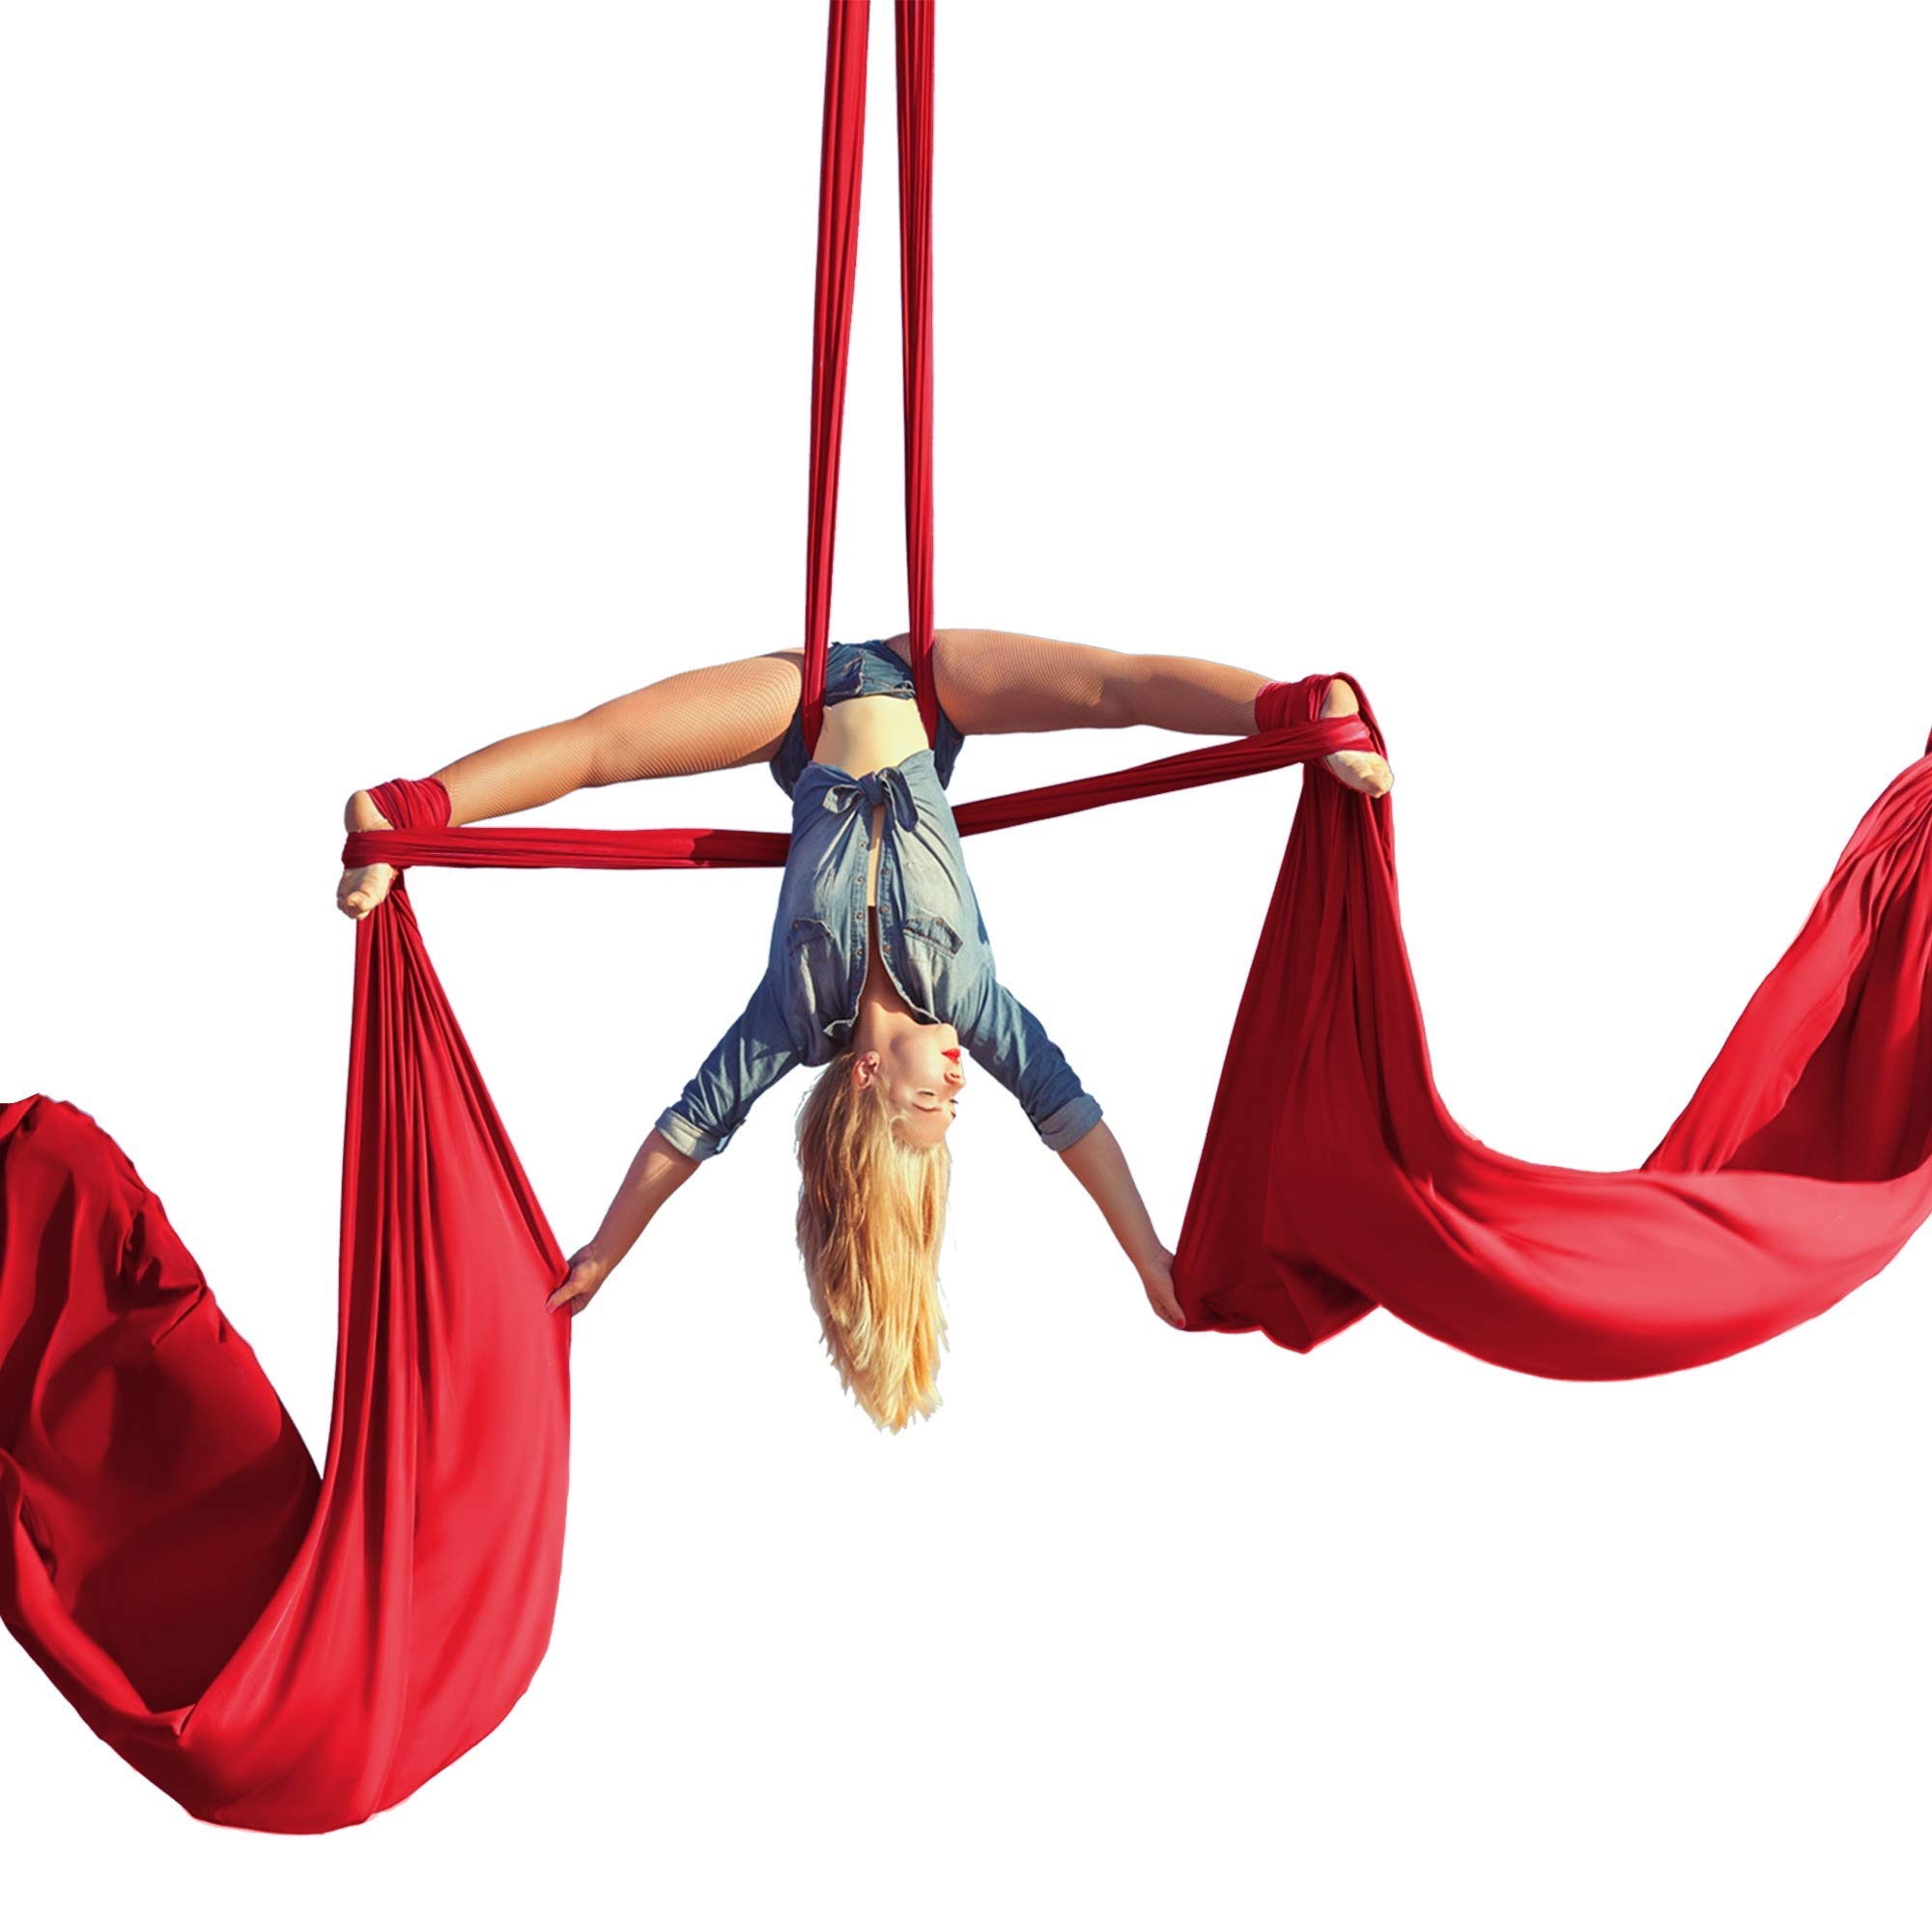 Aerial Silks: Leg-split in the air performed by a female aerialist, Recreational yoga. 2000x2000 HD Background.